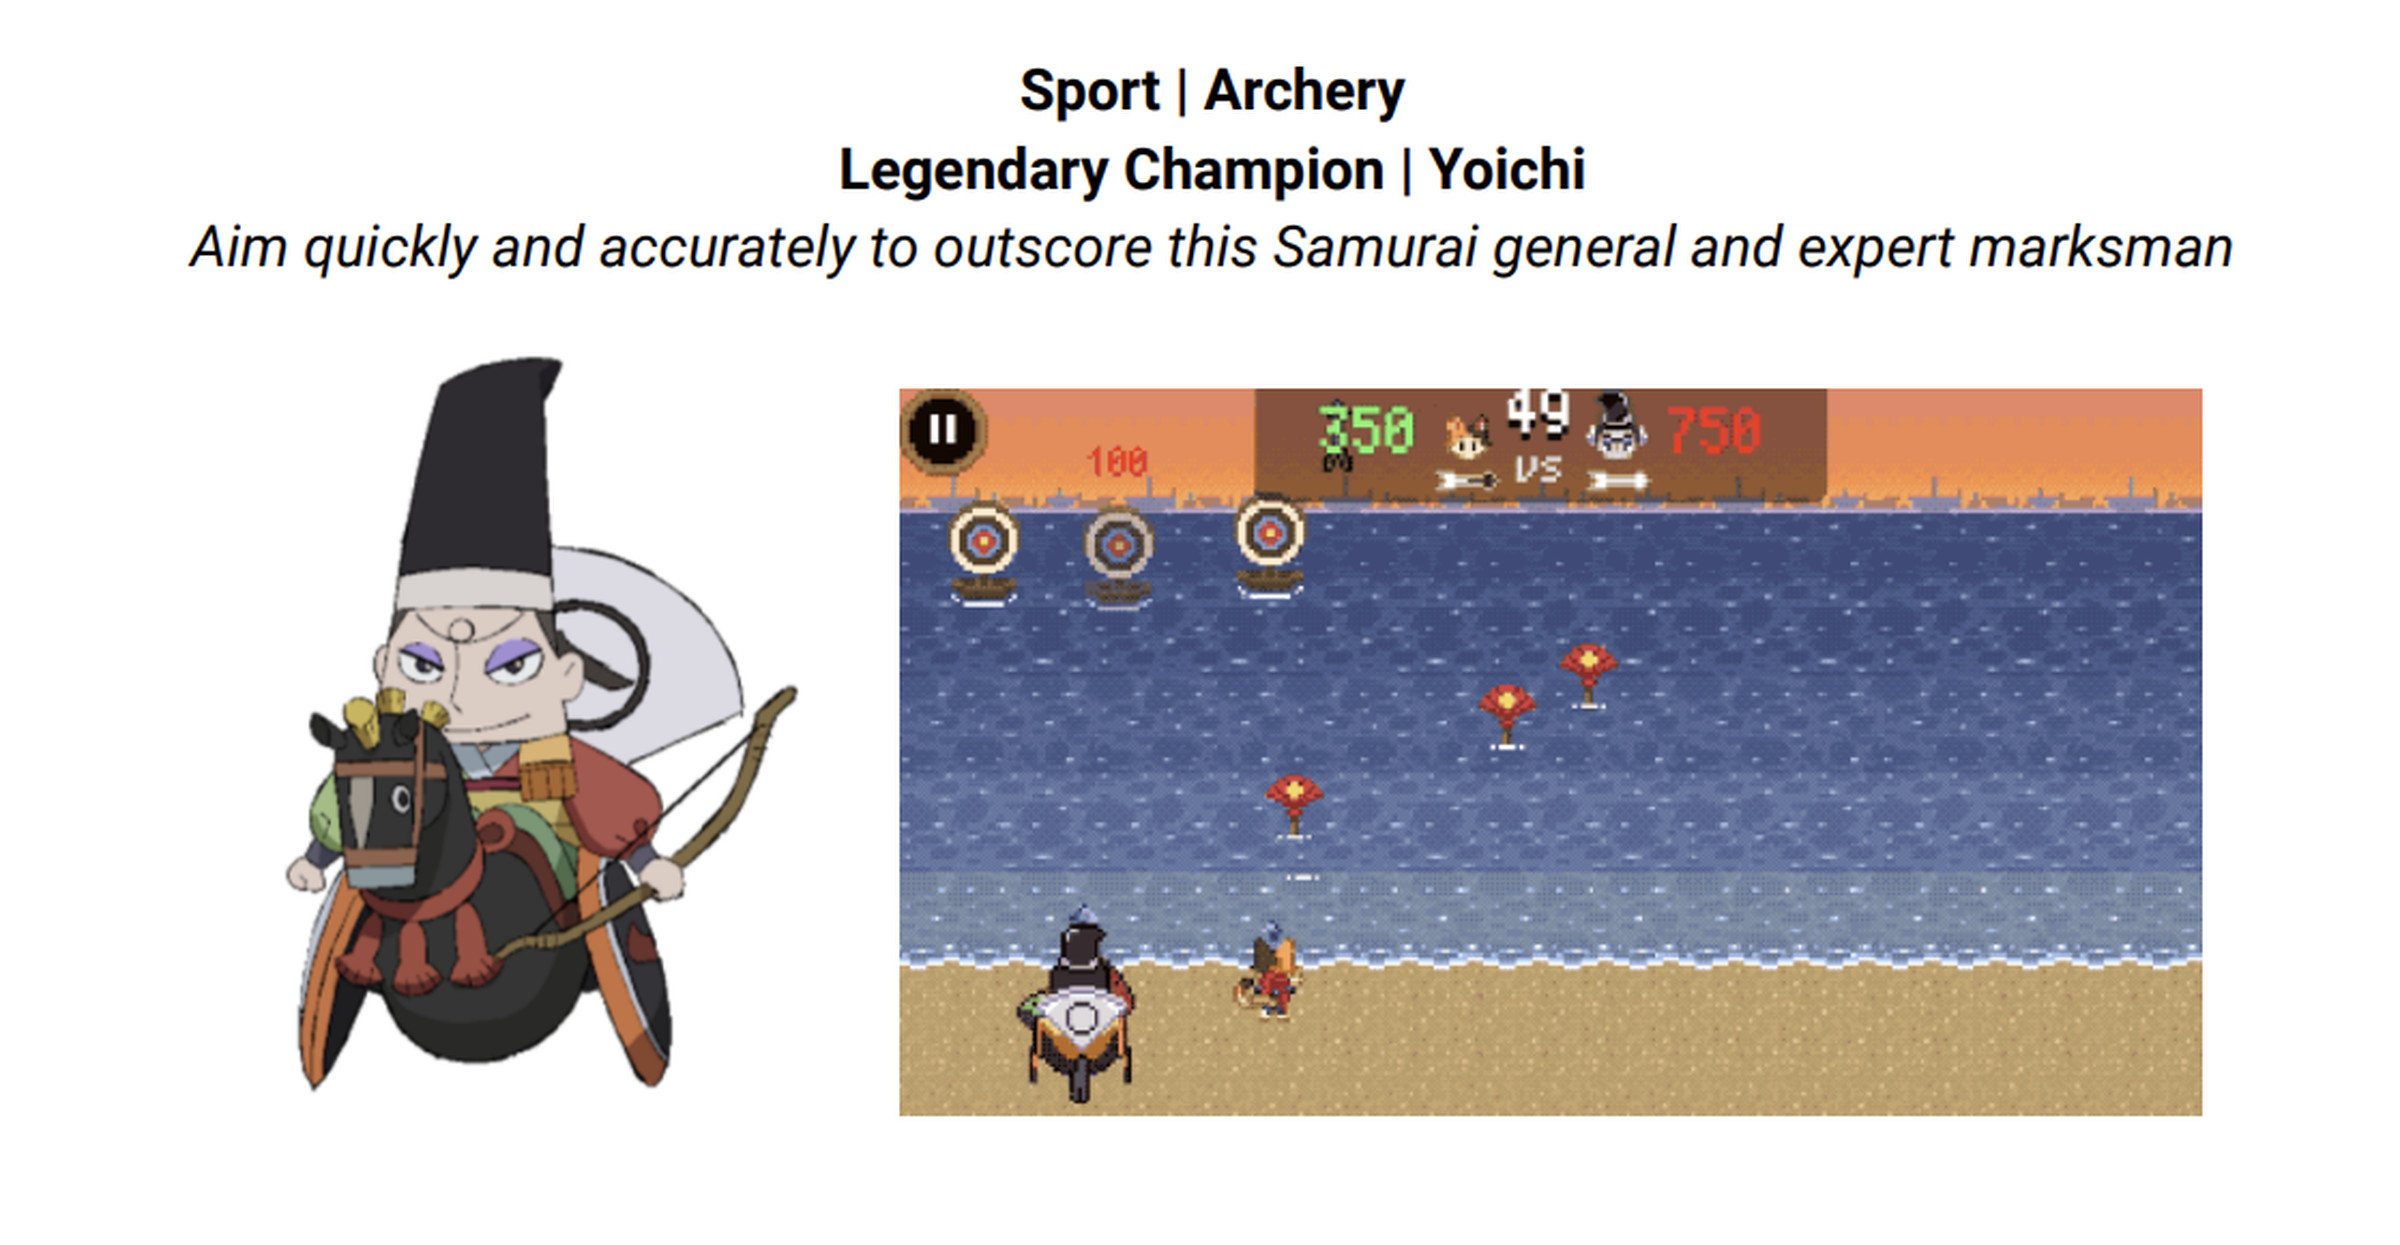 There’s also a shooting gallery-style archery mini-game against famous samurai Nasu no Yoichi. 